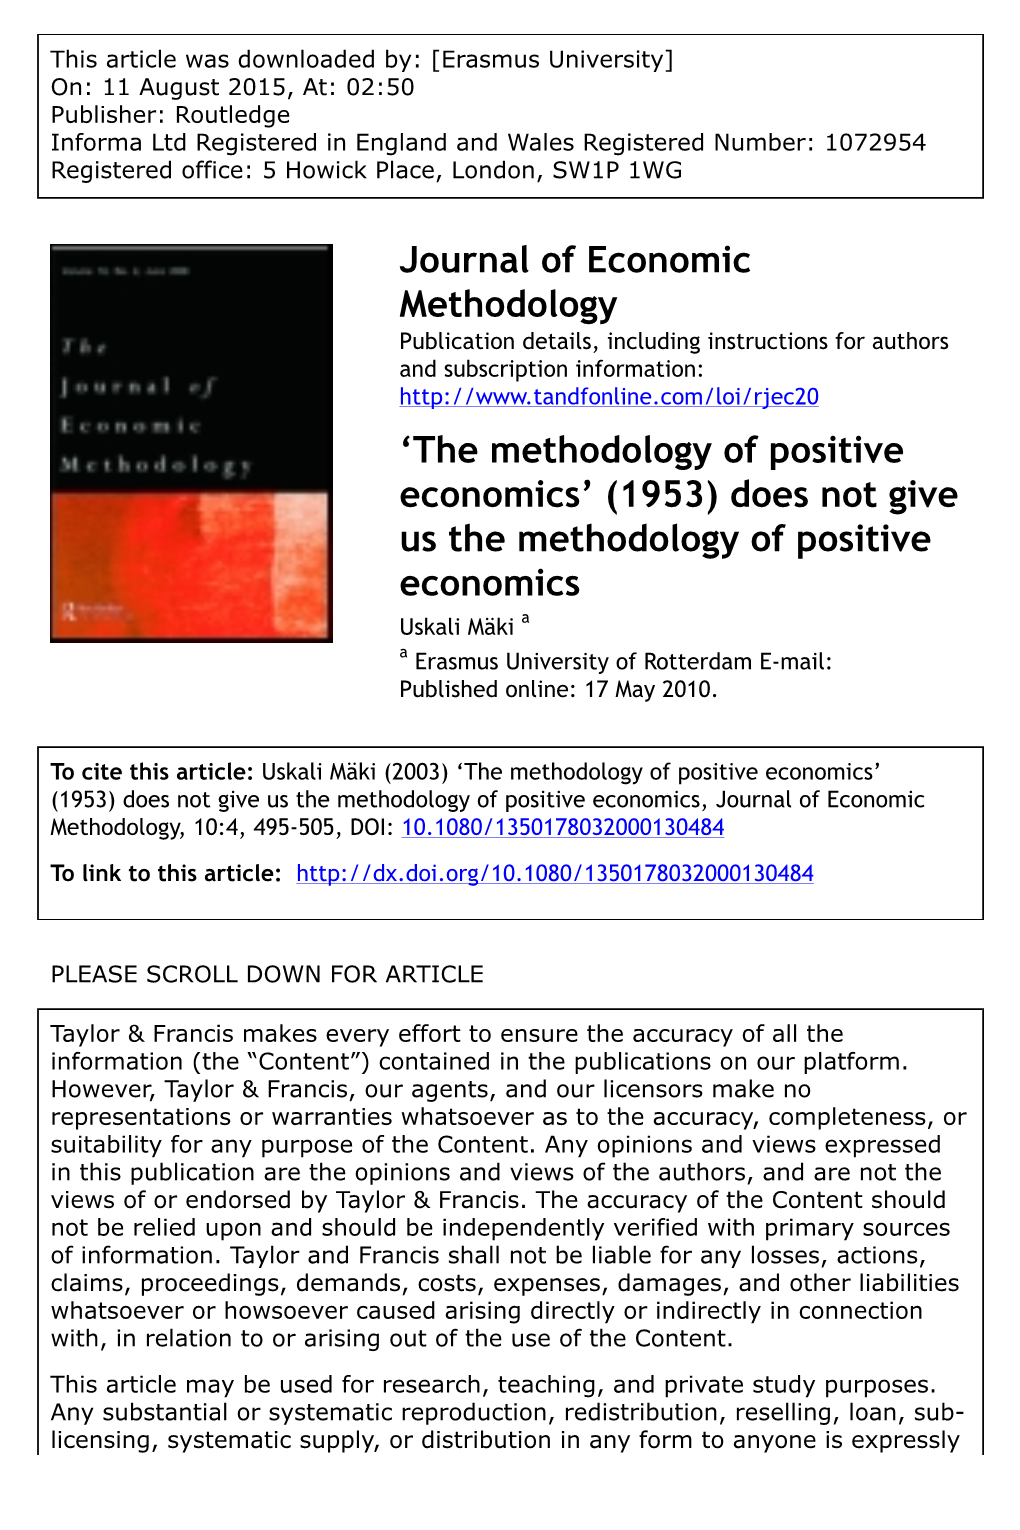 Journal of Economic Methodology 'The Methodology of Positive